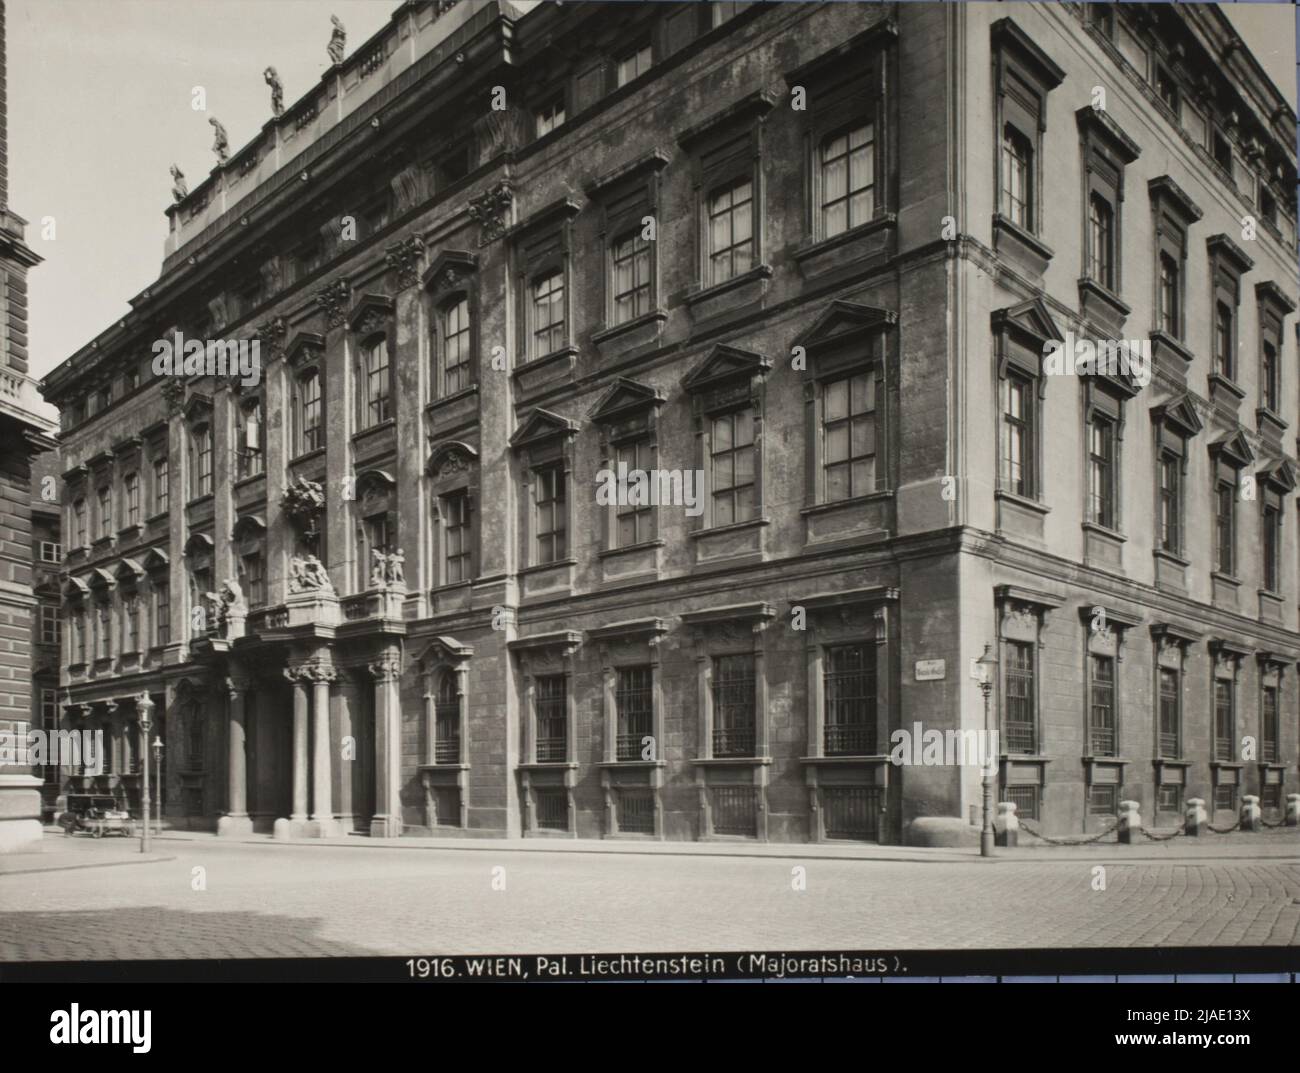 1., bank balse 9 - palace lungs stones. Bruno Raising Strategy (1869-1951), Photographs' Stock Photo